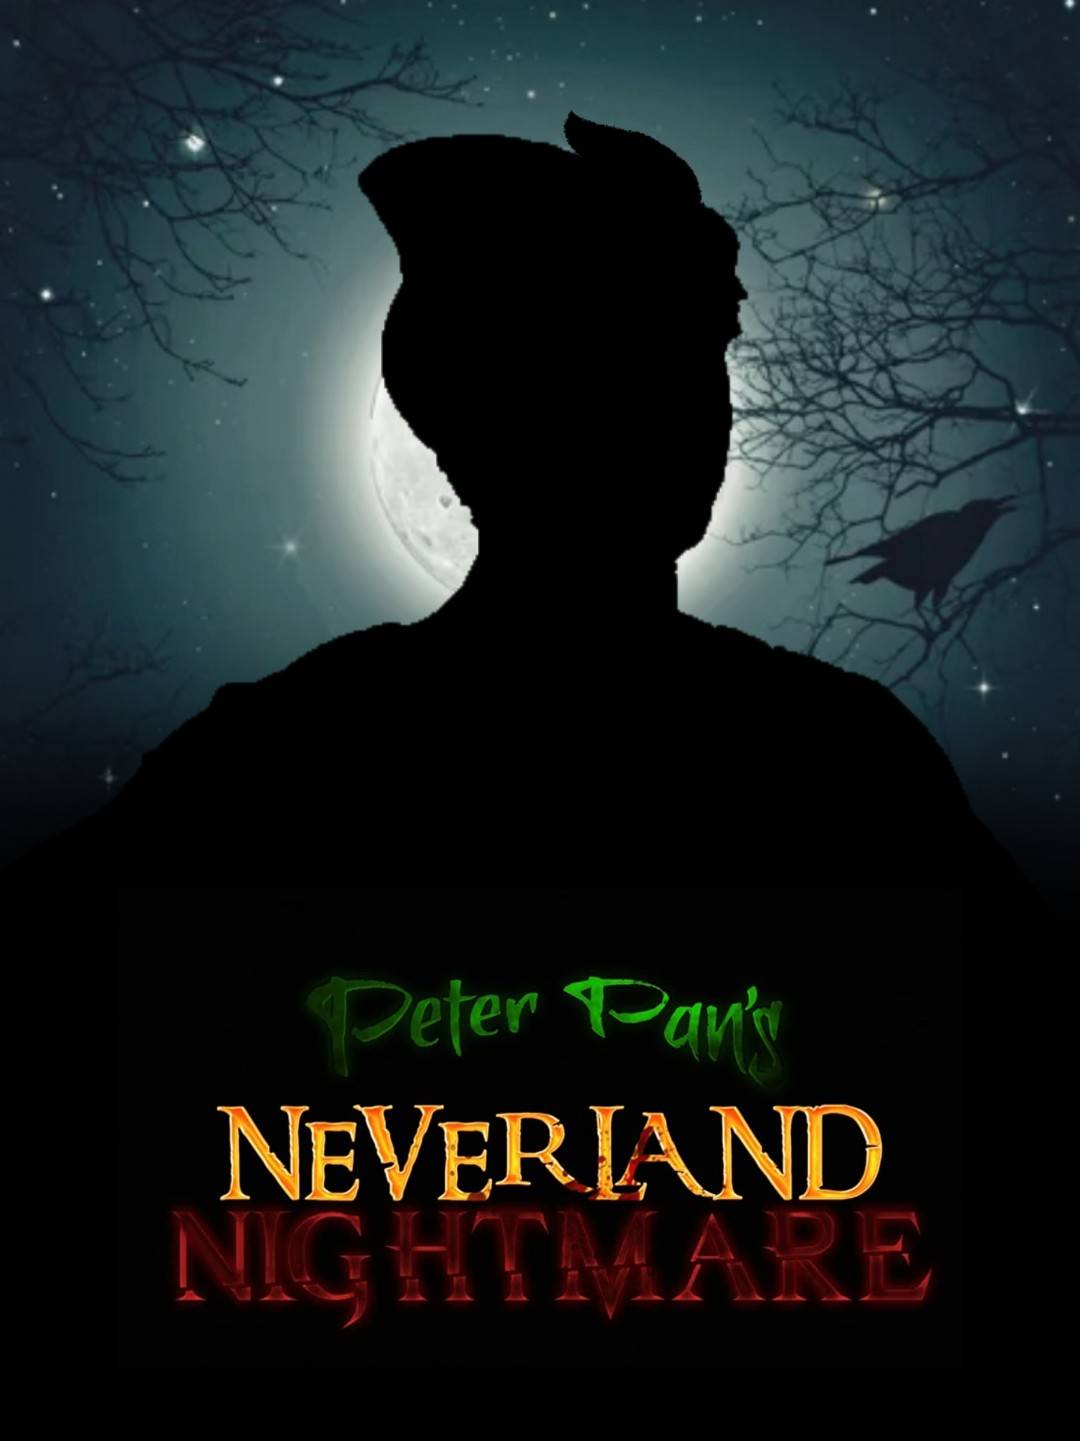 Peter Pan's Neverland Nightmare Poster by Woodlandsplit15 on DeviantArt